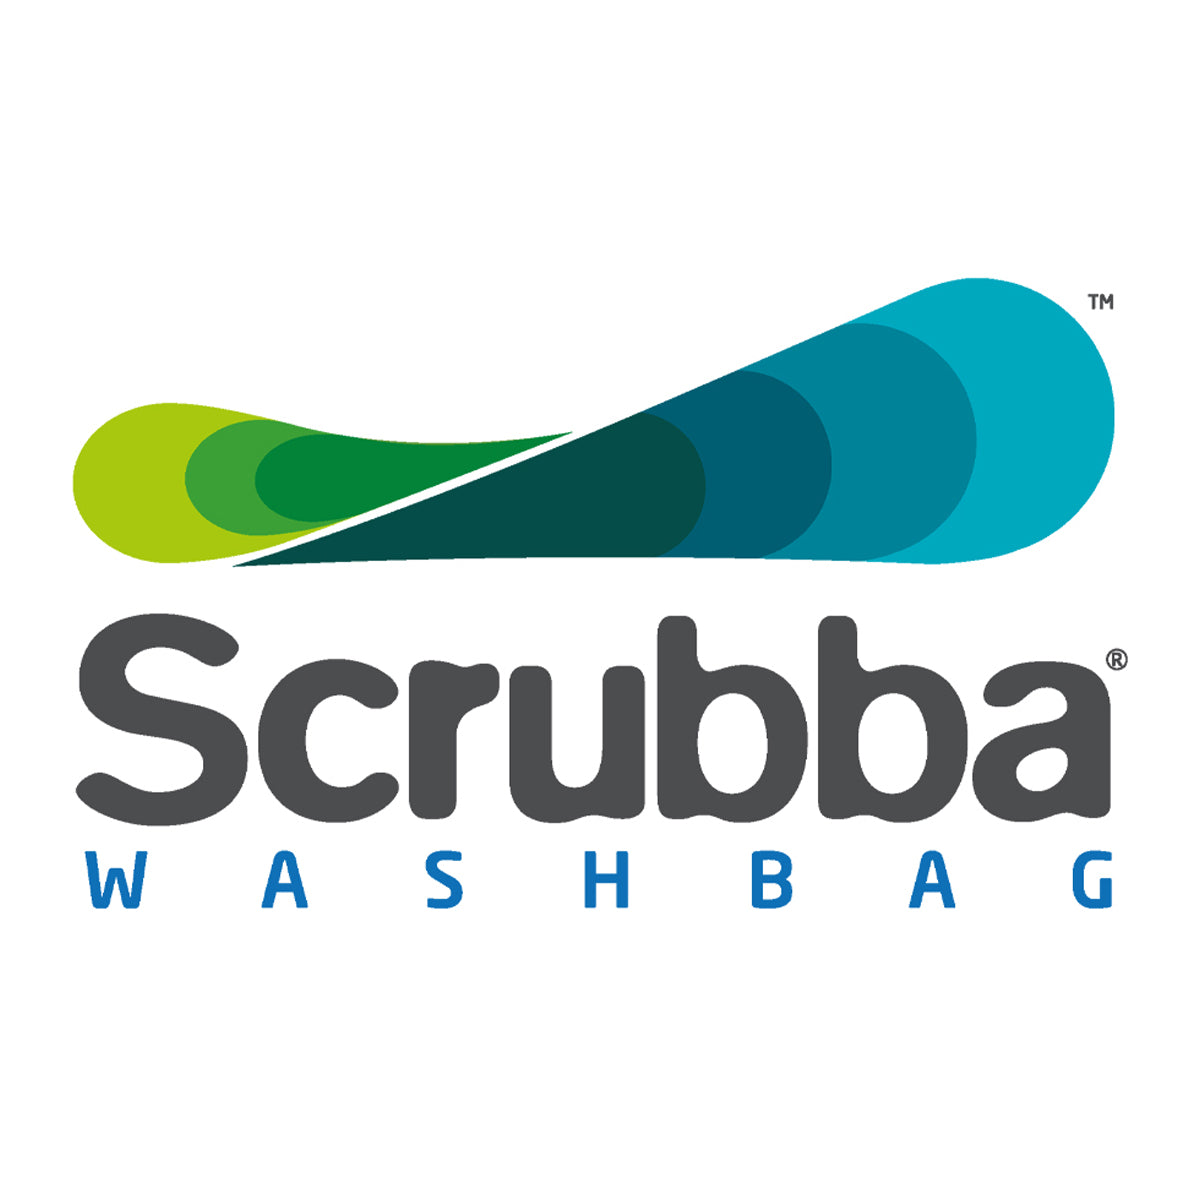 The Scrubba Wash Bag